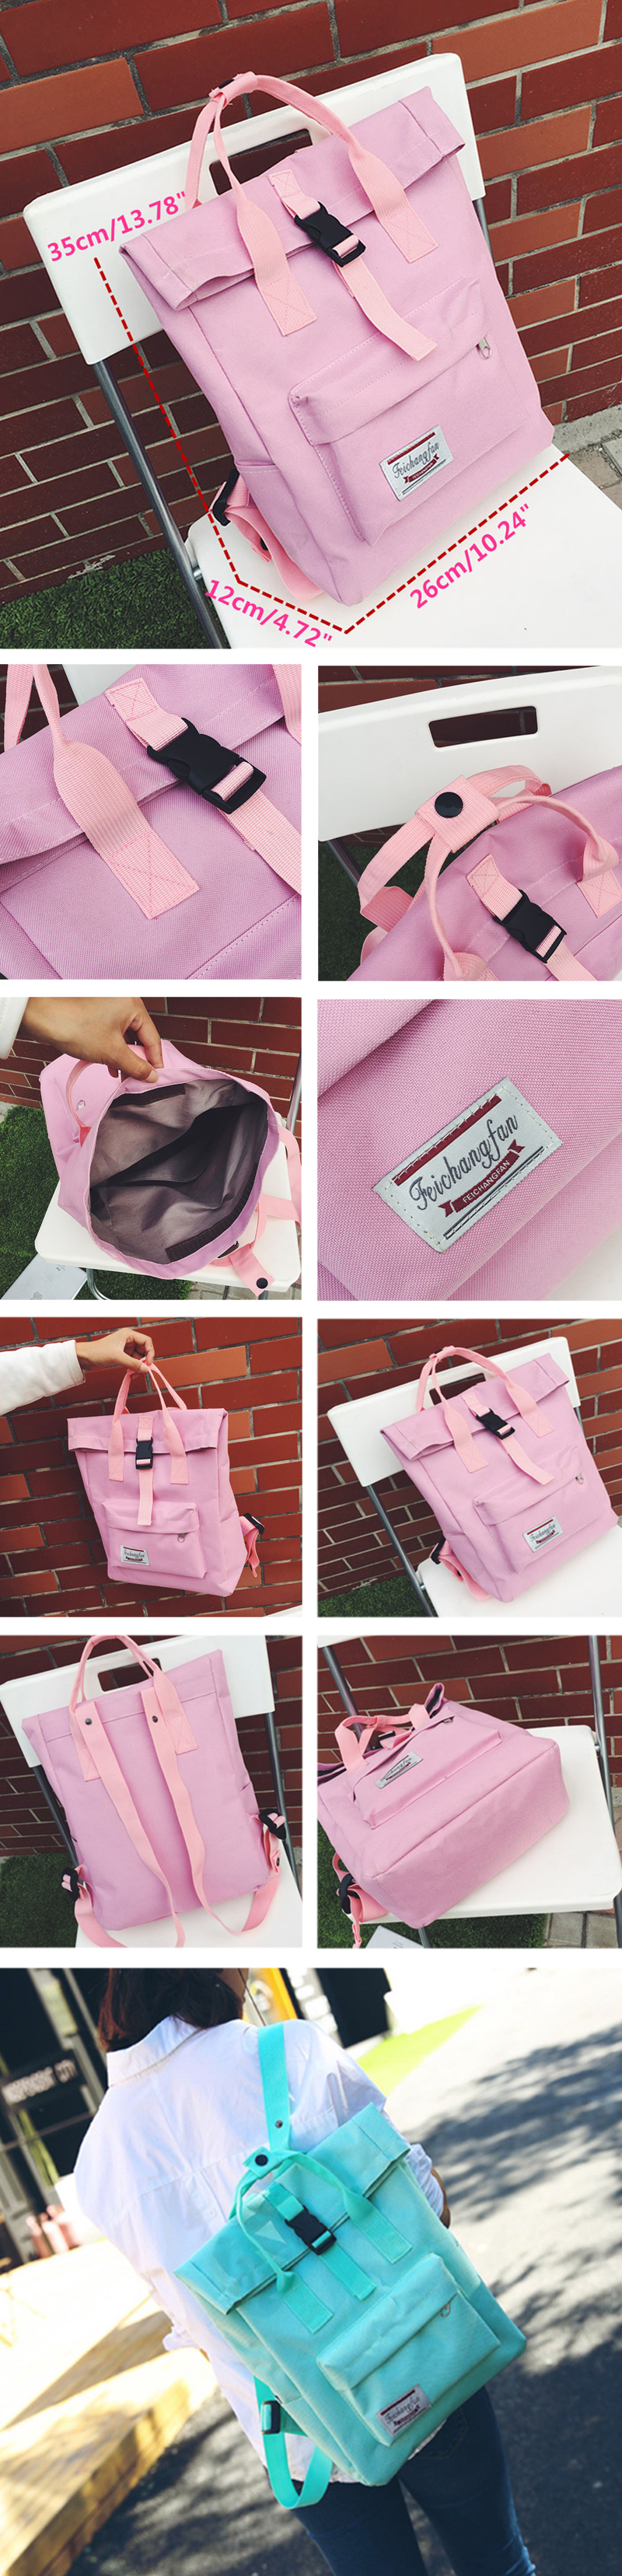 Banggood-10L-Canvas-Backpack-Student-School-Bag-Travel-Camping-Handbag-Shoulder-Pack-Shopping-Tote-1361055-1